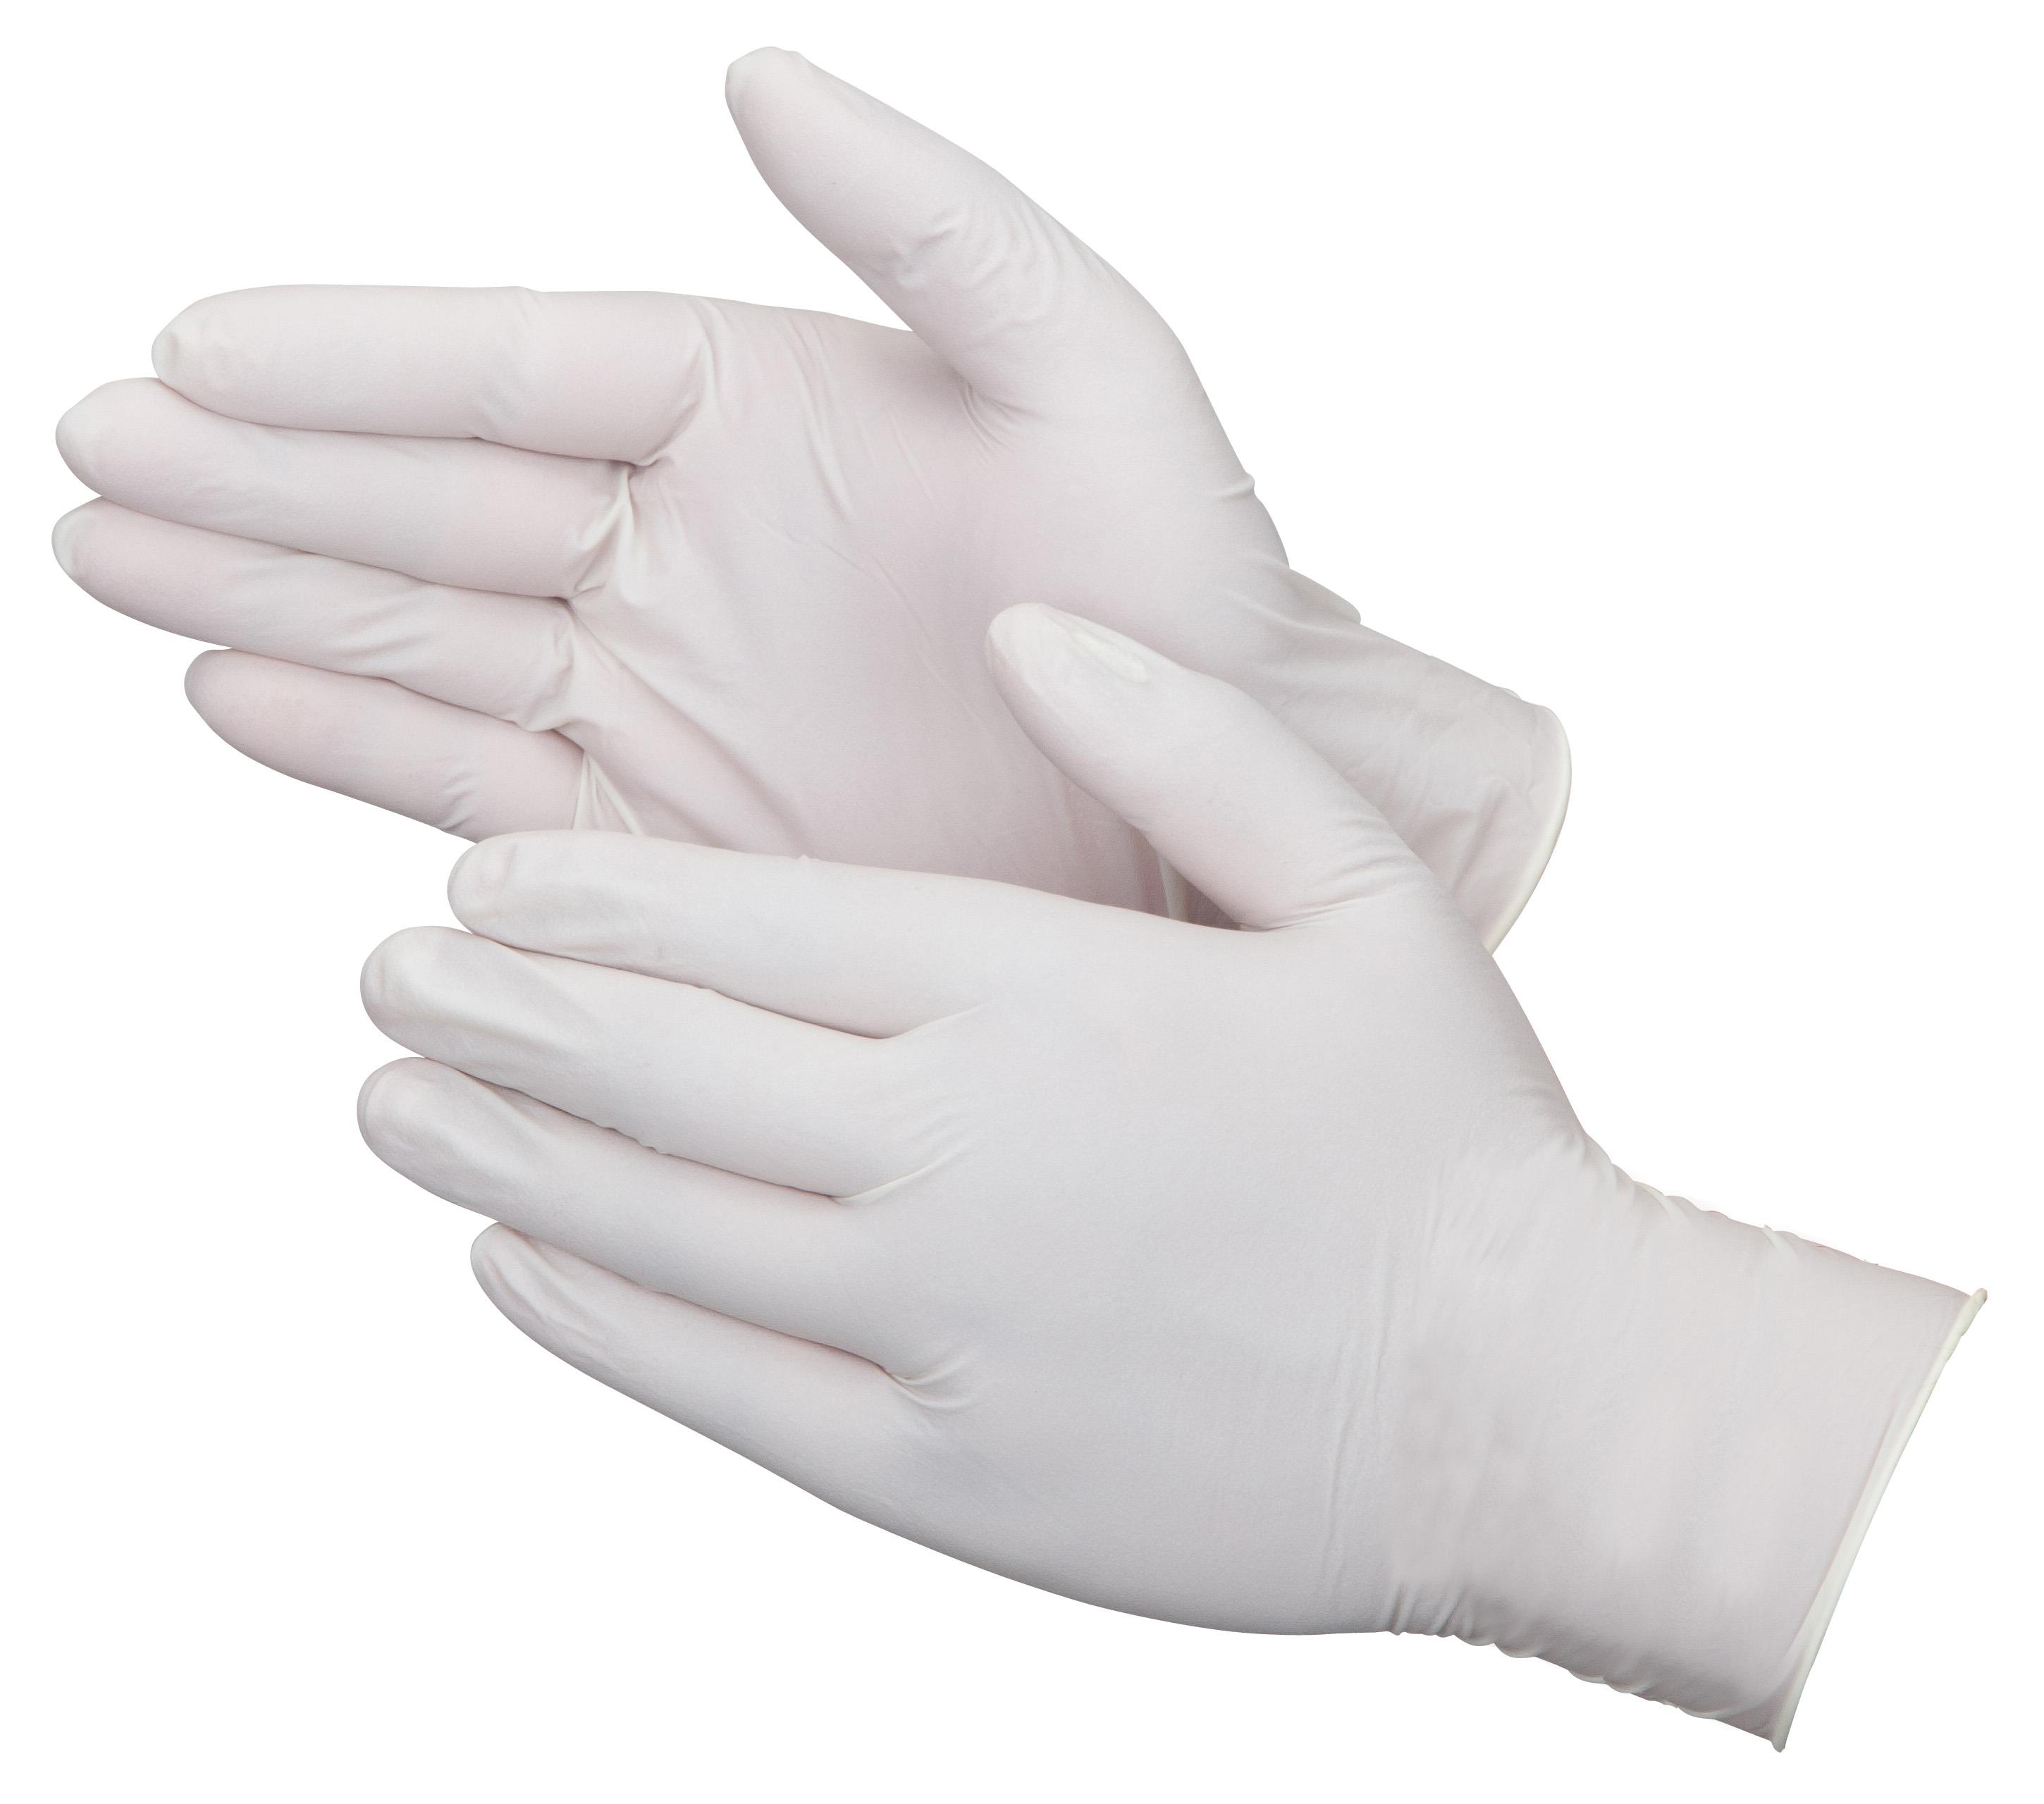 DURASKIN 5 MIL POWDERED LATEX 100/BX - Disposable Gloves